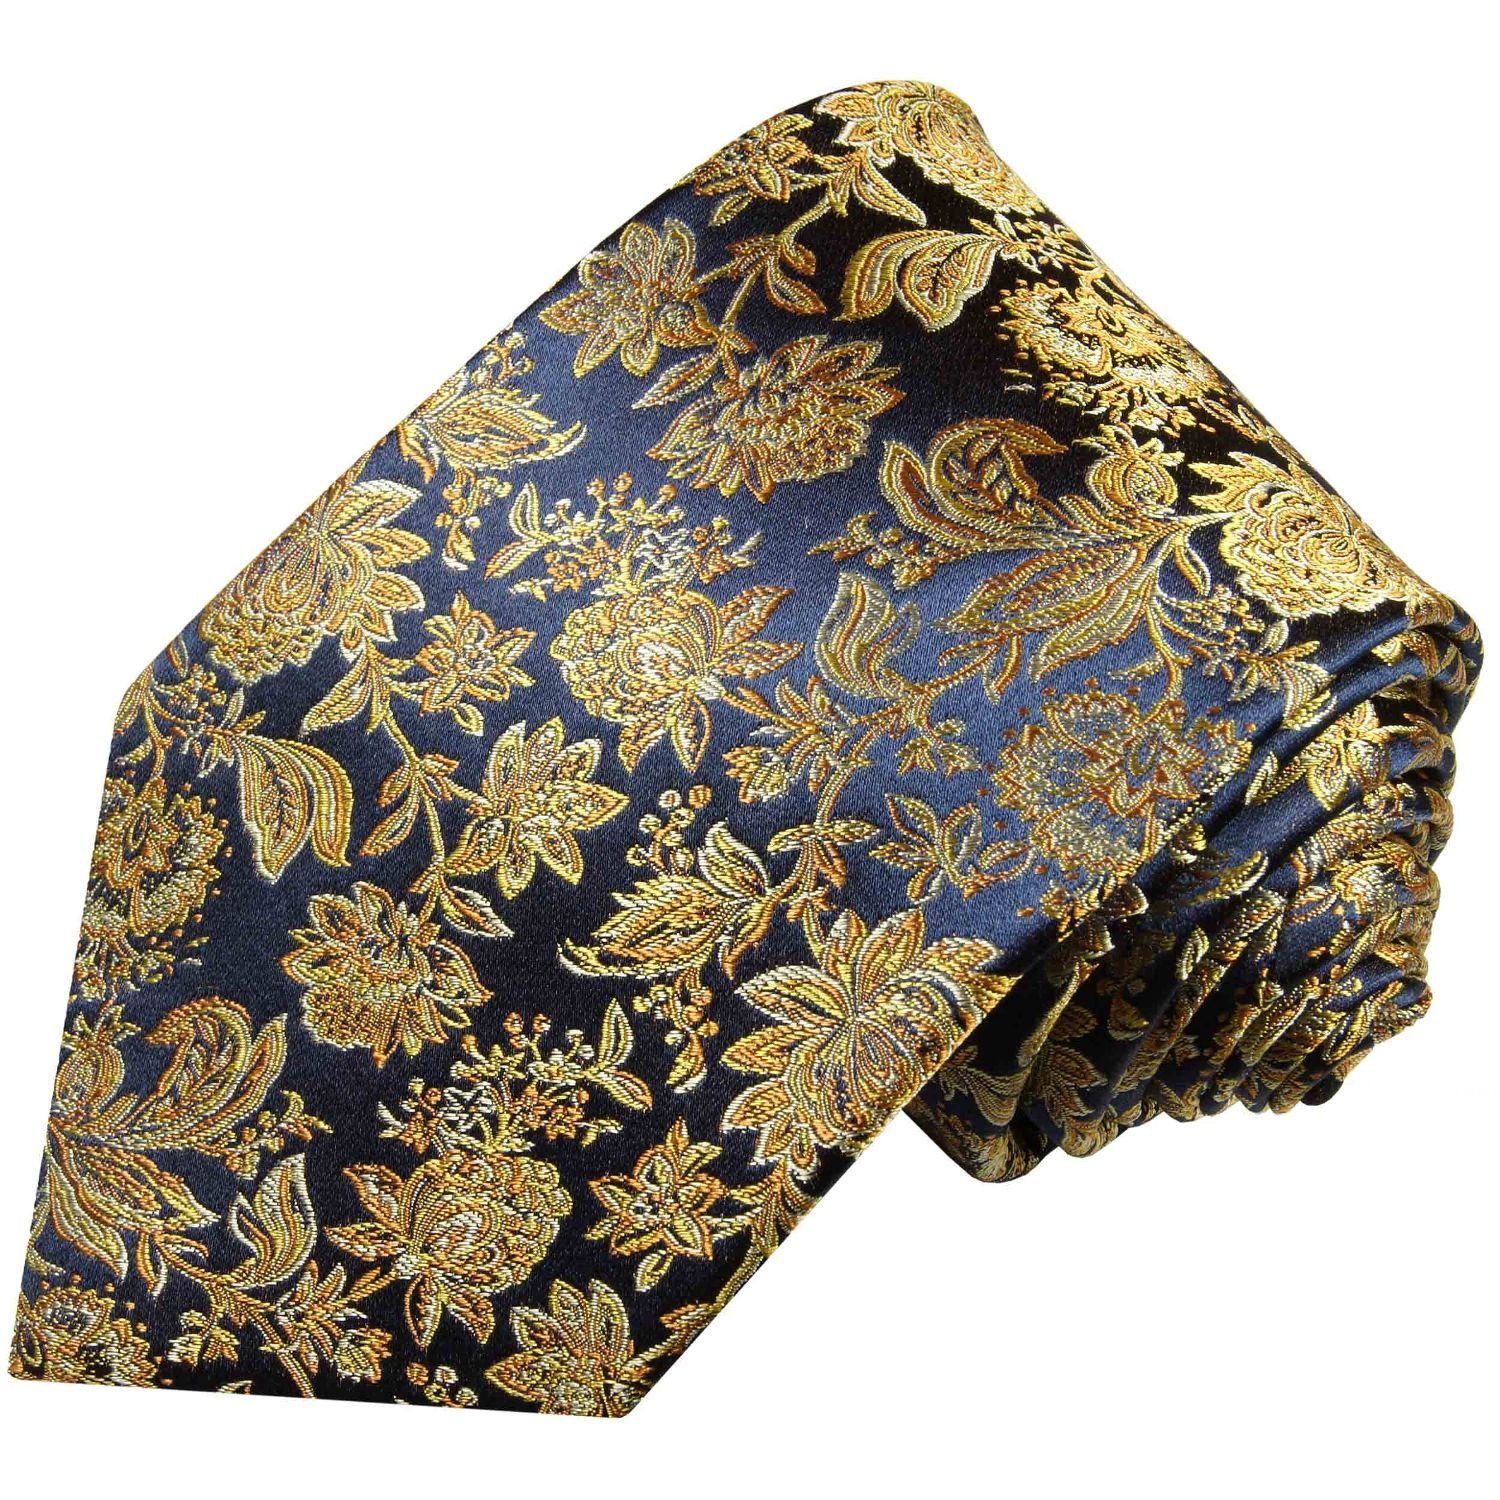 Paul Malone Krawatte Herren Seidenkrawatte Schlips modern floral 100% Seide Breit (8cm), dunkelblau gold braun 683